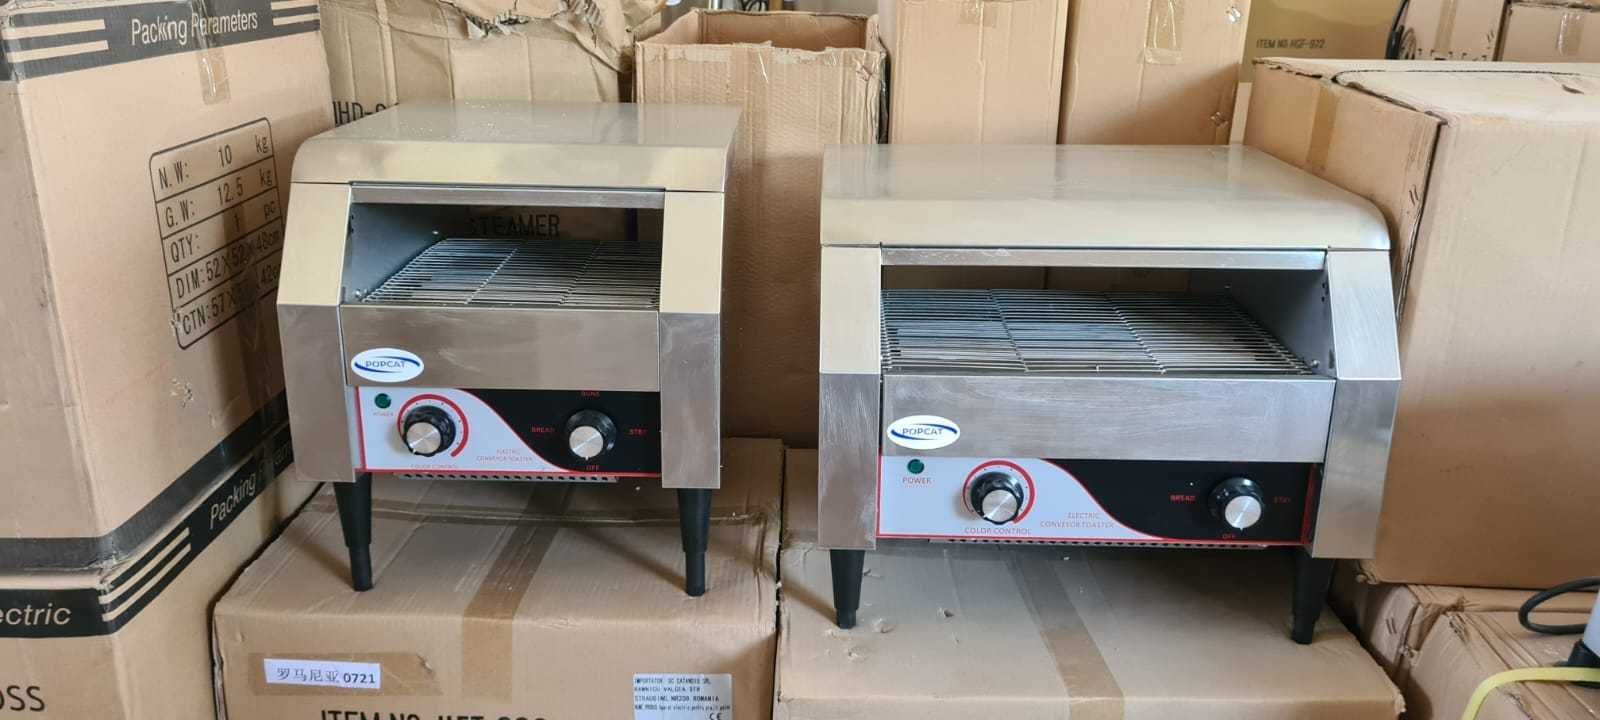 Toaster electric cu banda 2 DIMENSIUNI-TRANSPORT GRATUIT